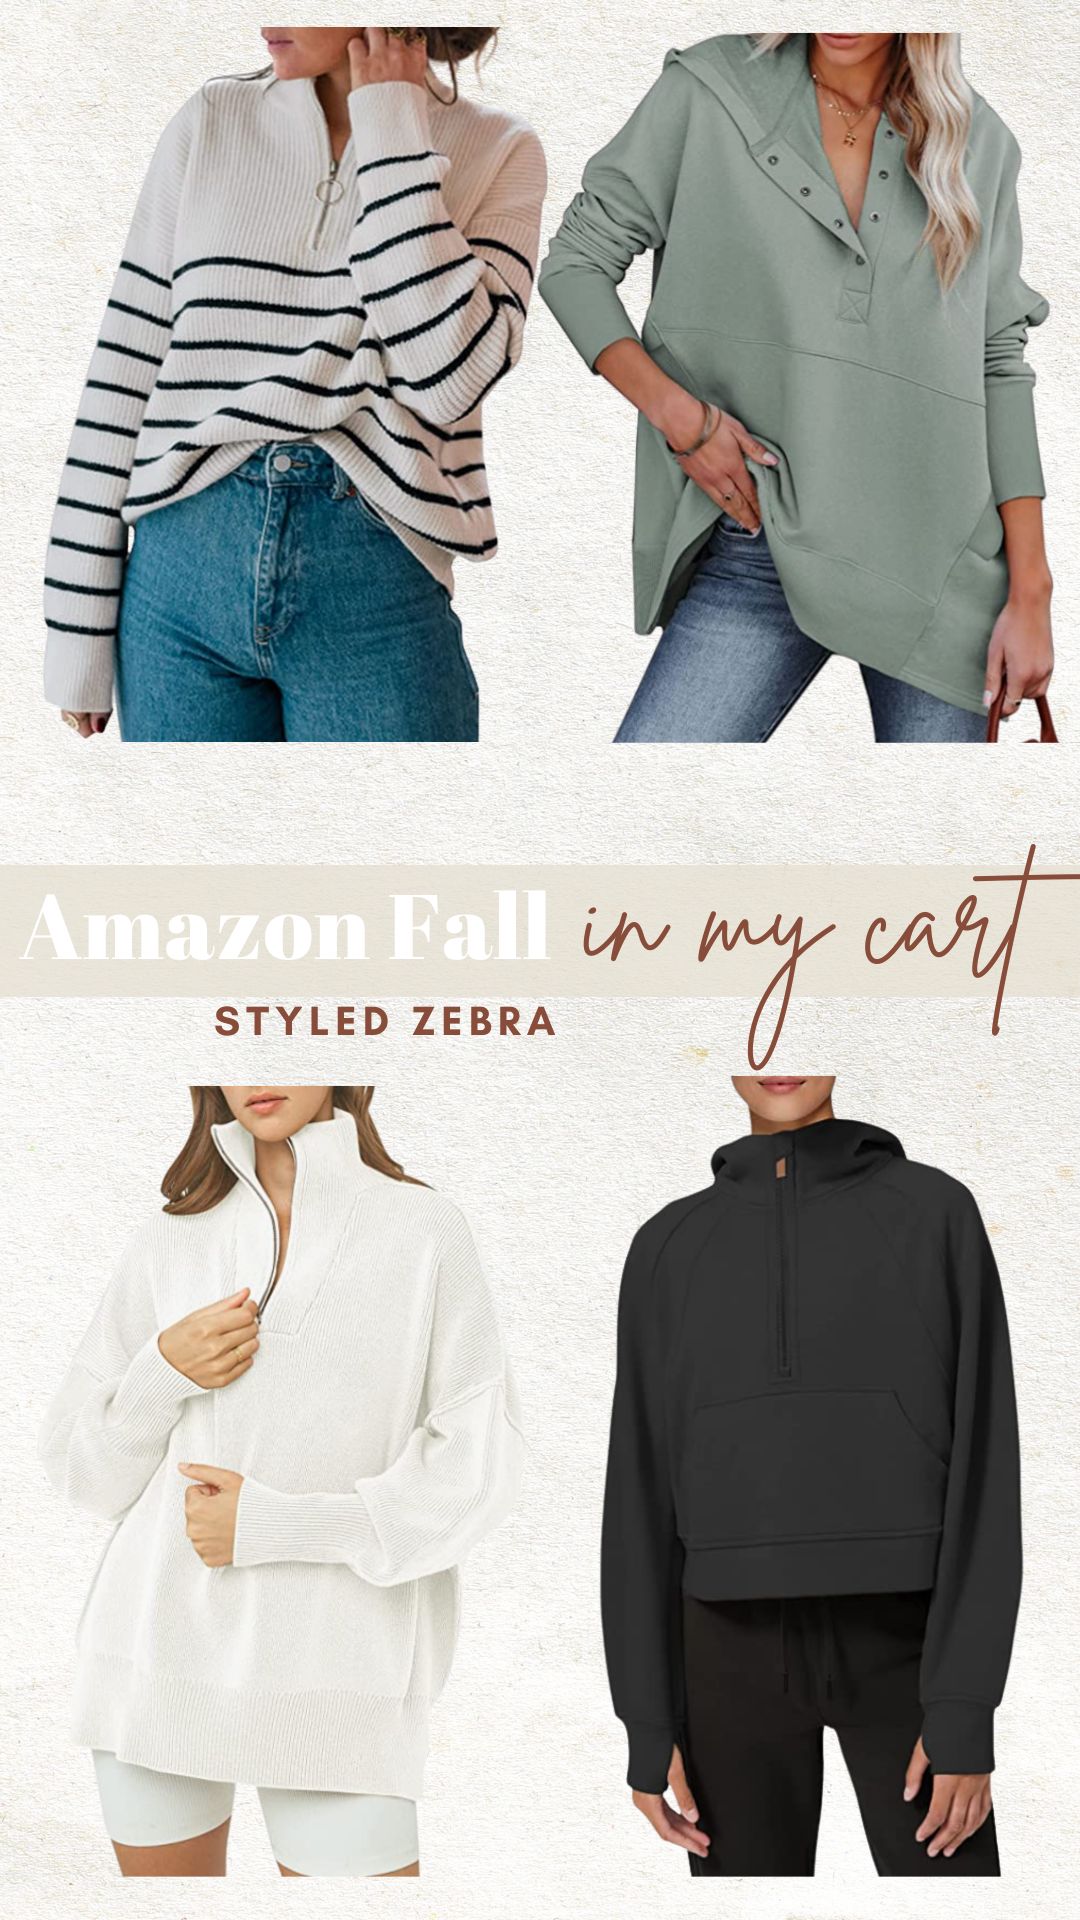 Styled Zebra's Amazon Page | Amazon (US)